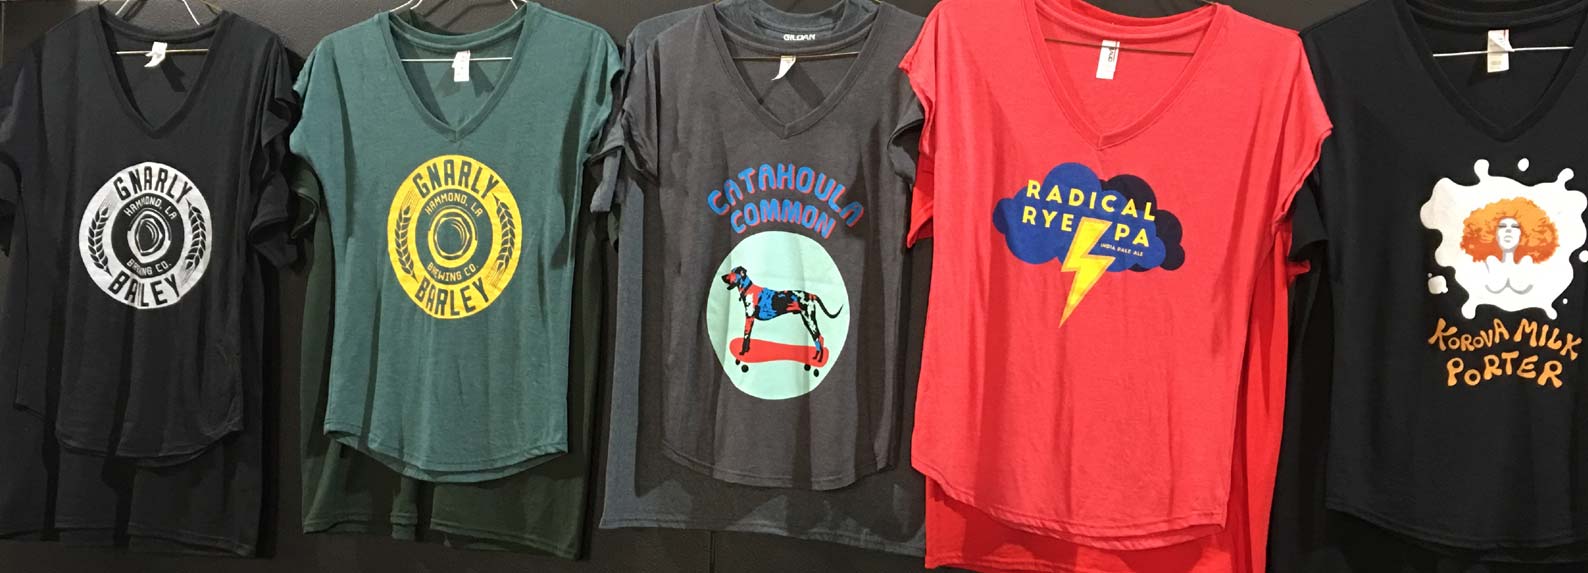 GNARLY BARLEY, CATAHOULA COMMON, RADICAL RYE, KOROVA MILK PORTER Sample T-shirt images